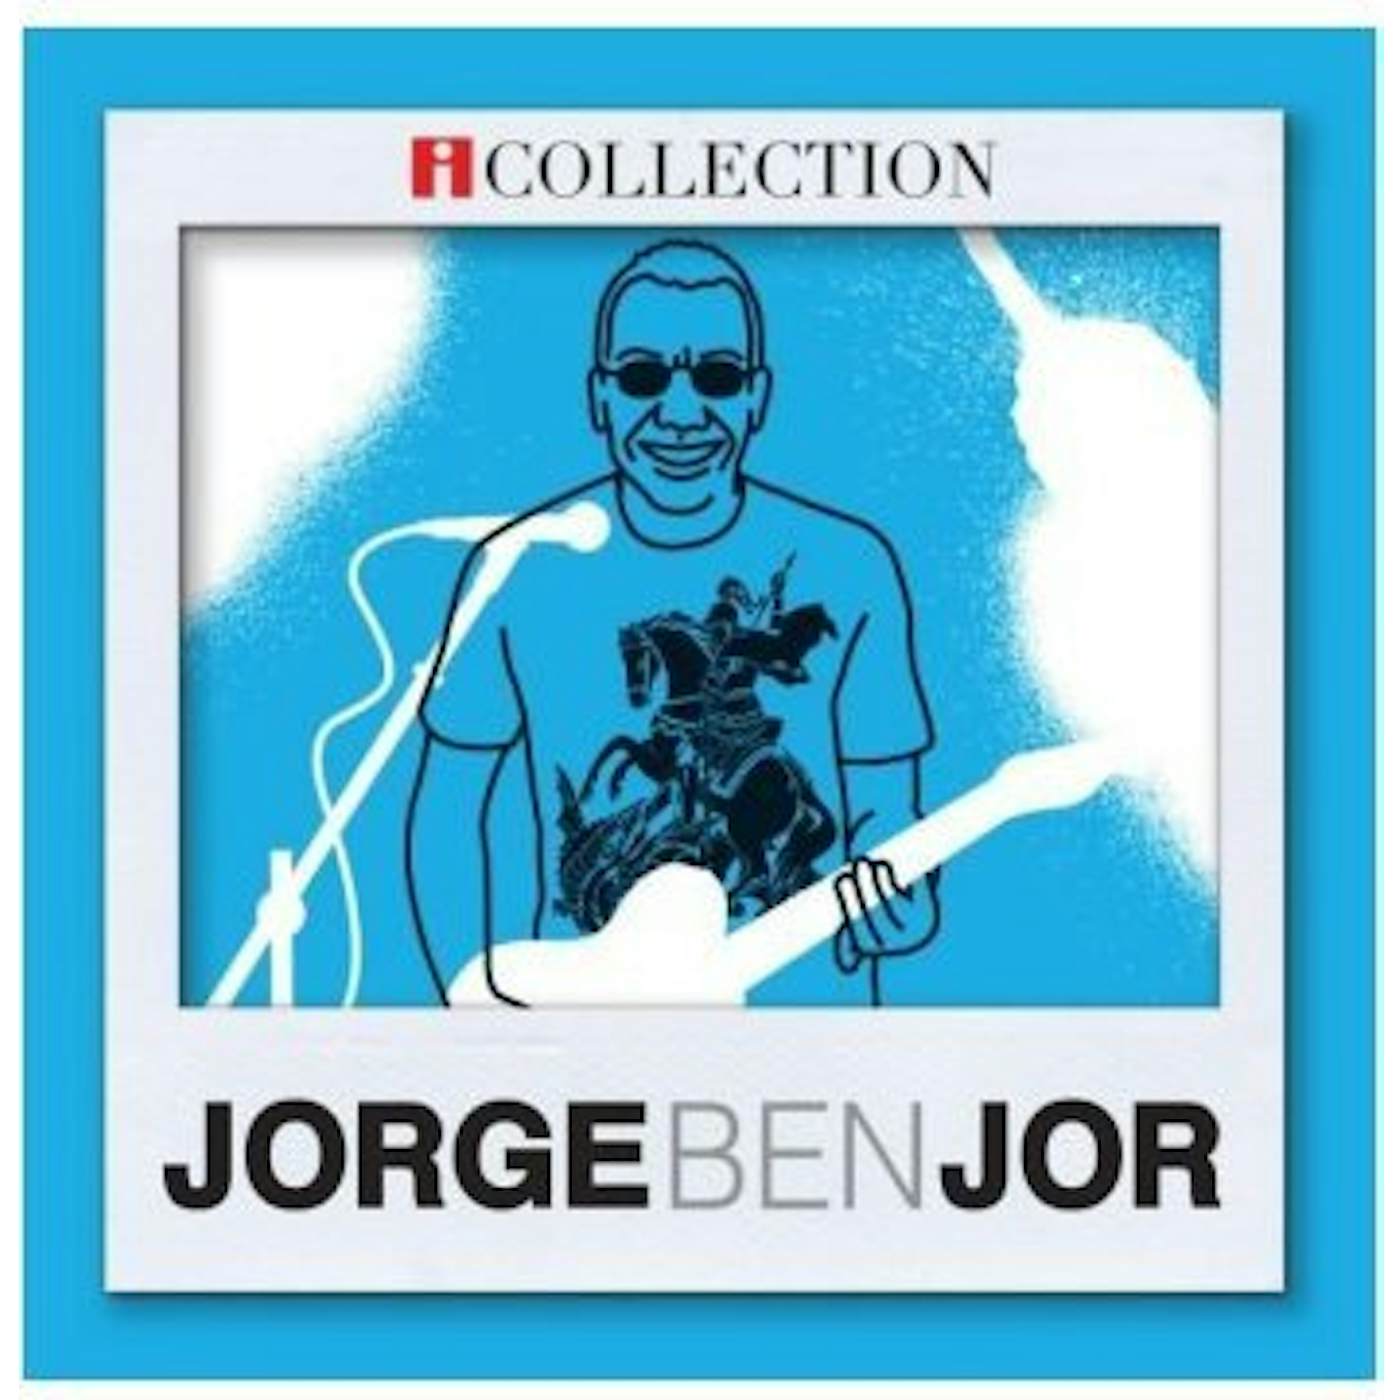 Jorge Ben Jor SERIE ICOLLECTION CD